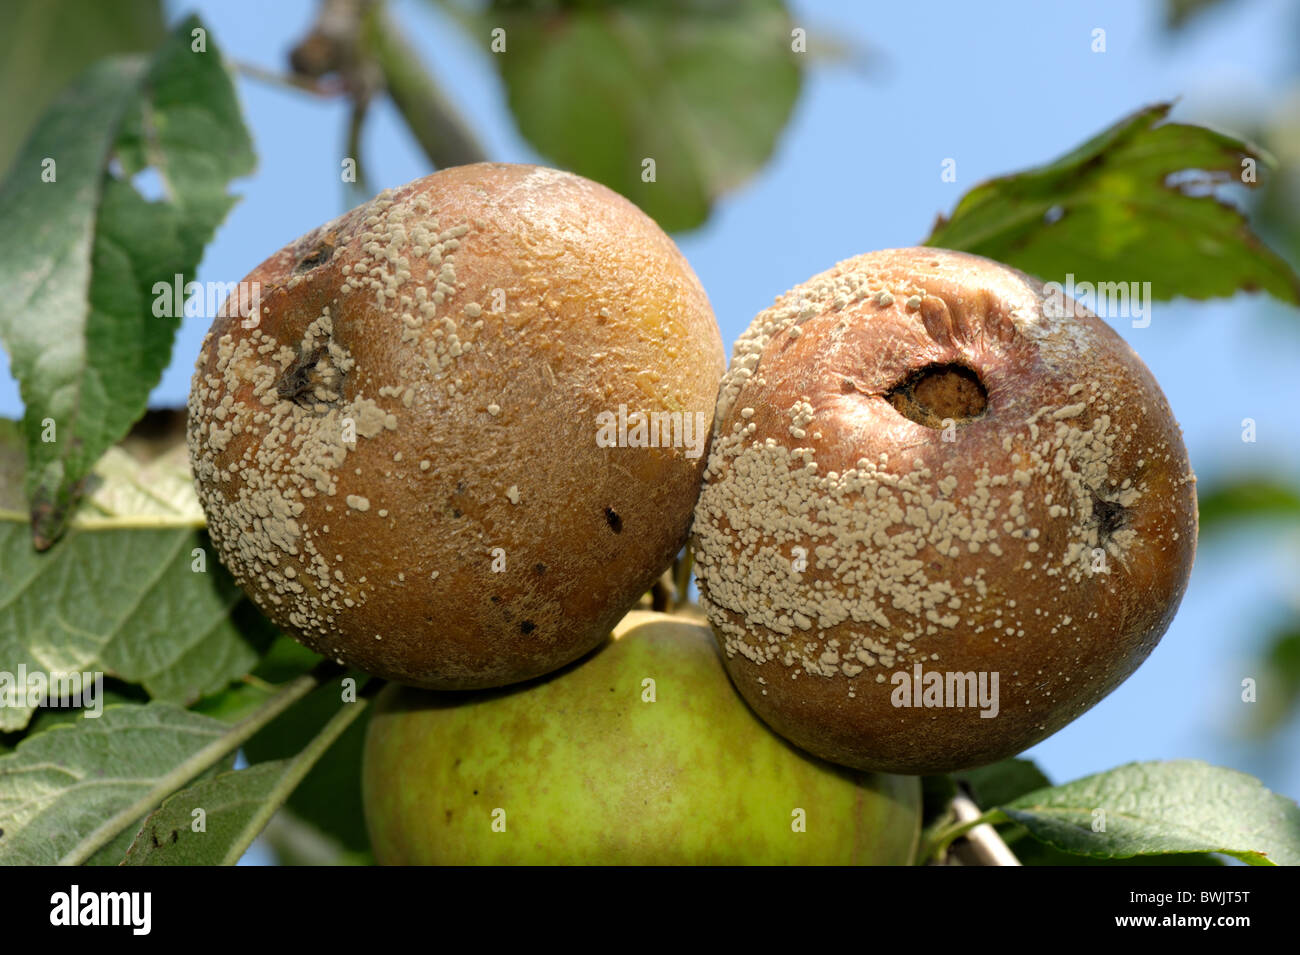 Brown rot (Monilinia fructigena) ftruit rot on mature bramley apples Stock Photo